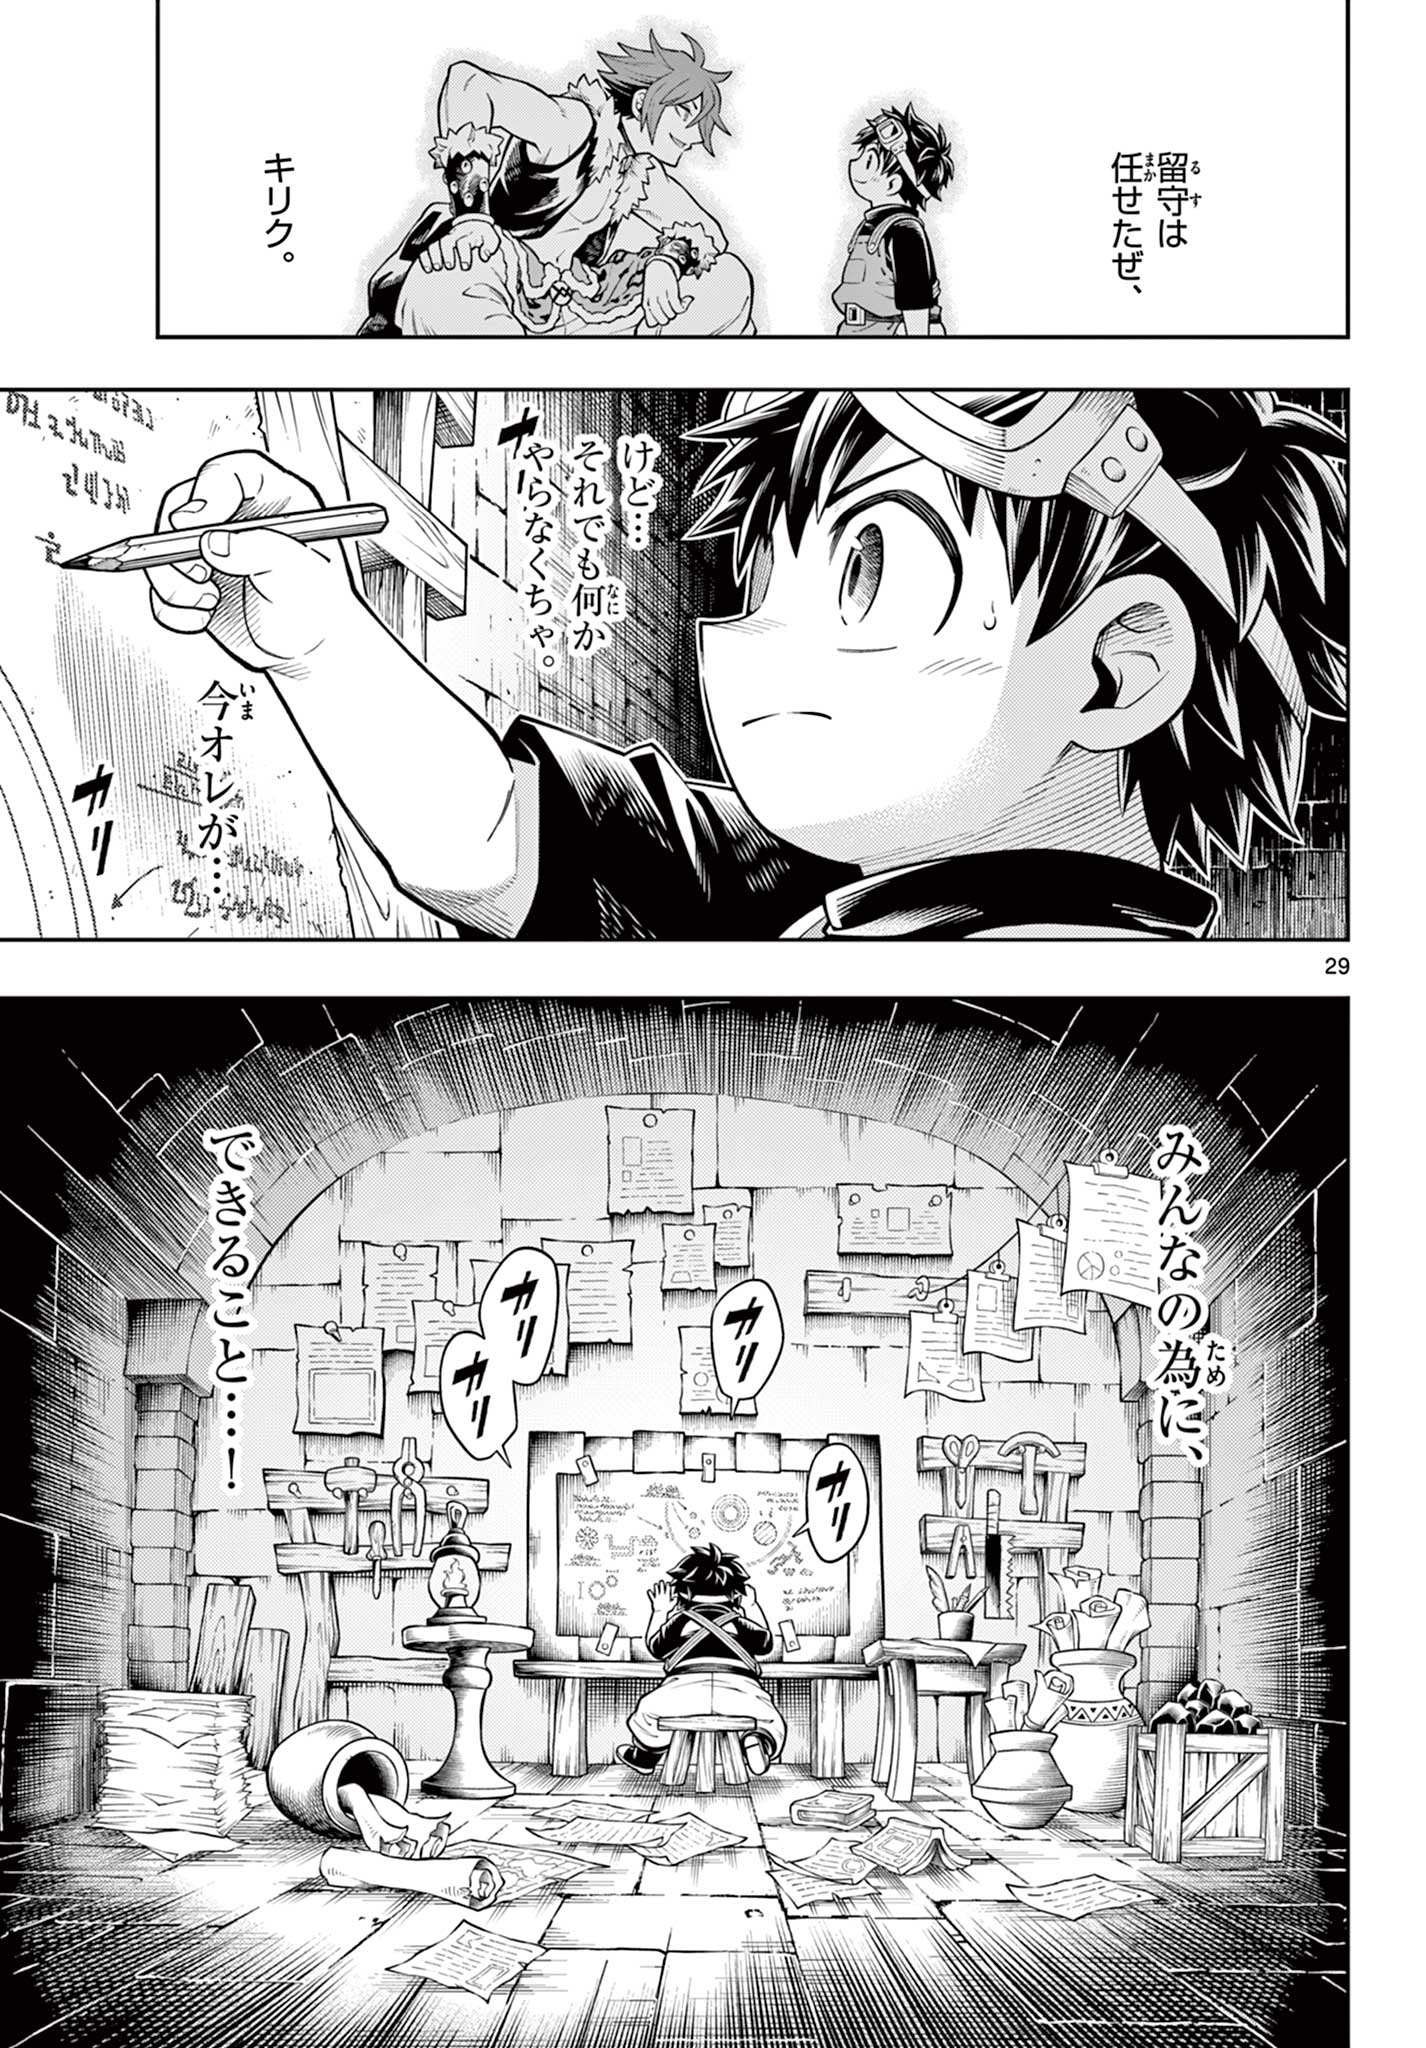 Soara to Mamono no ie - Chapter 26 - Page 29